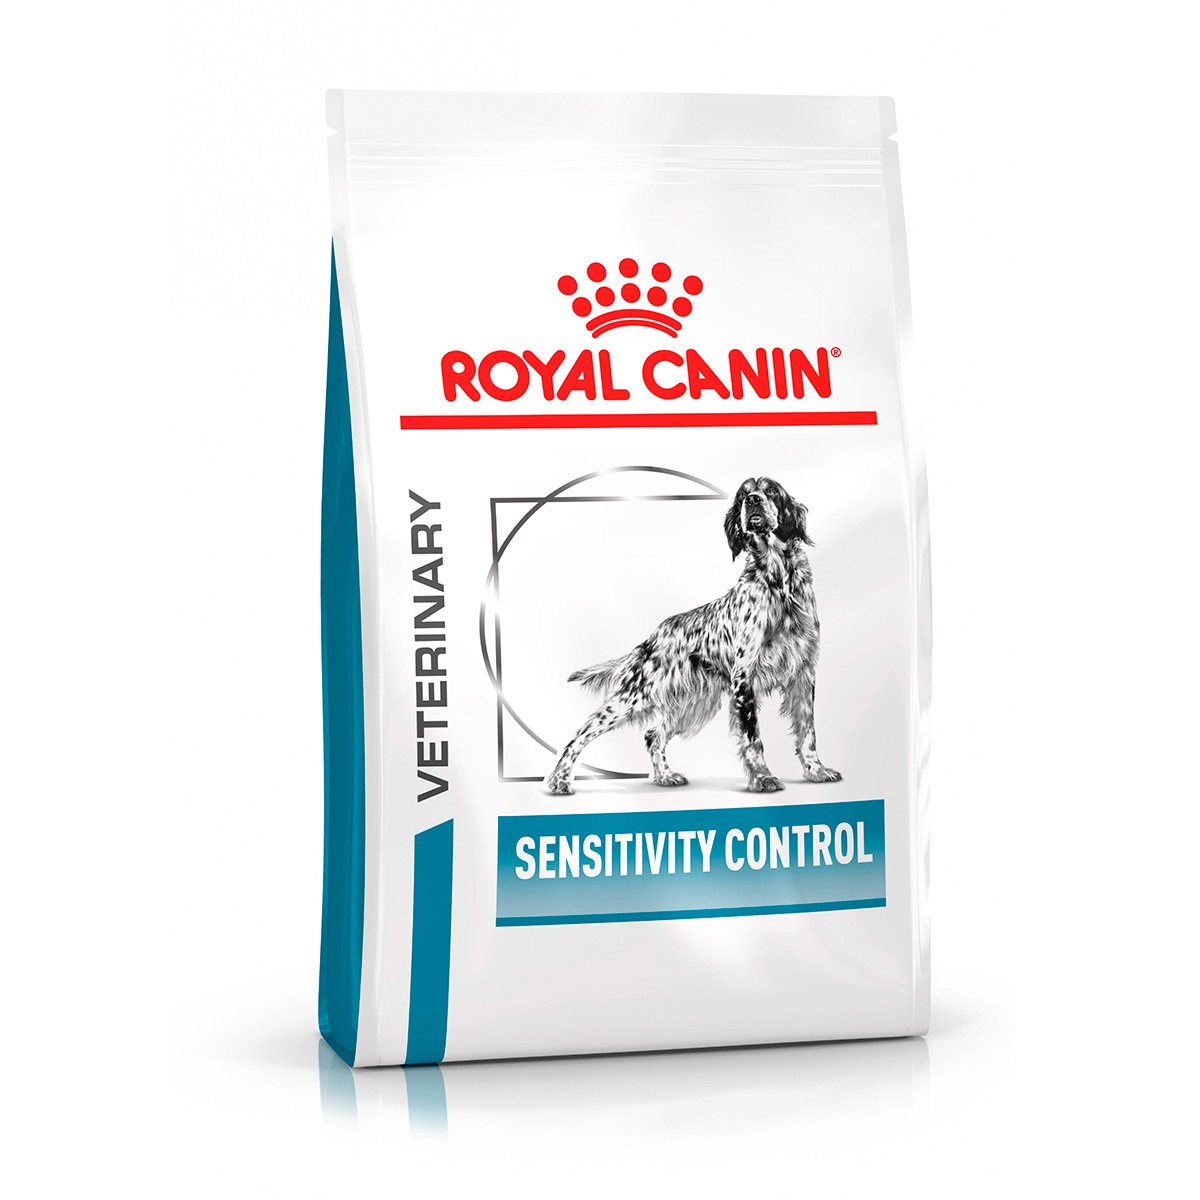 ROYAL CANIN Veterinary SENSITIVITY CONTROL Trockenfutter für Hunde 7kg von Royal Canin